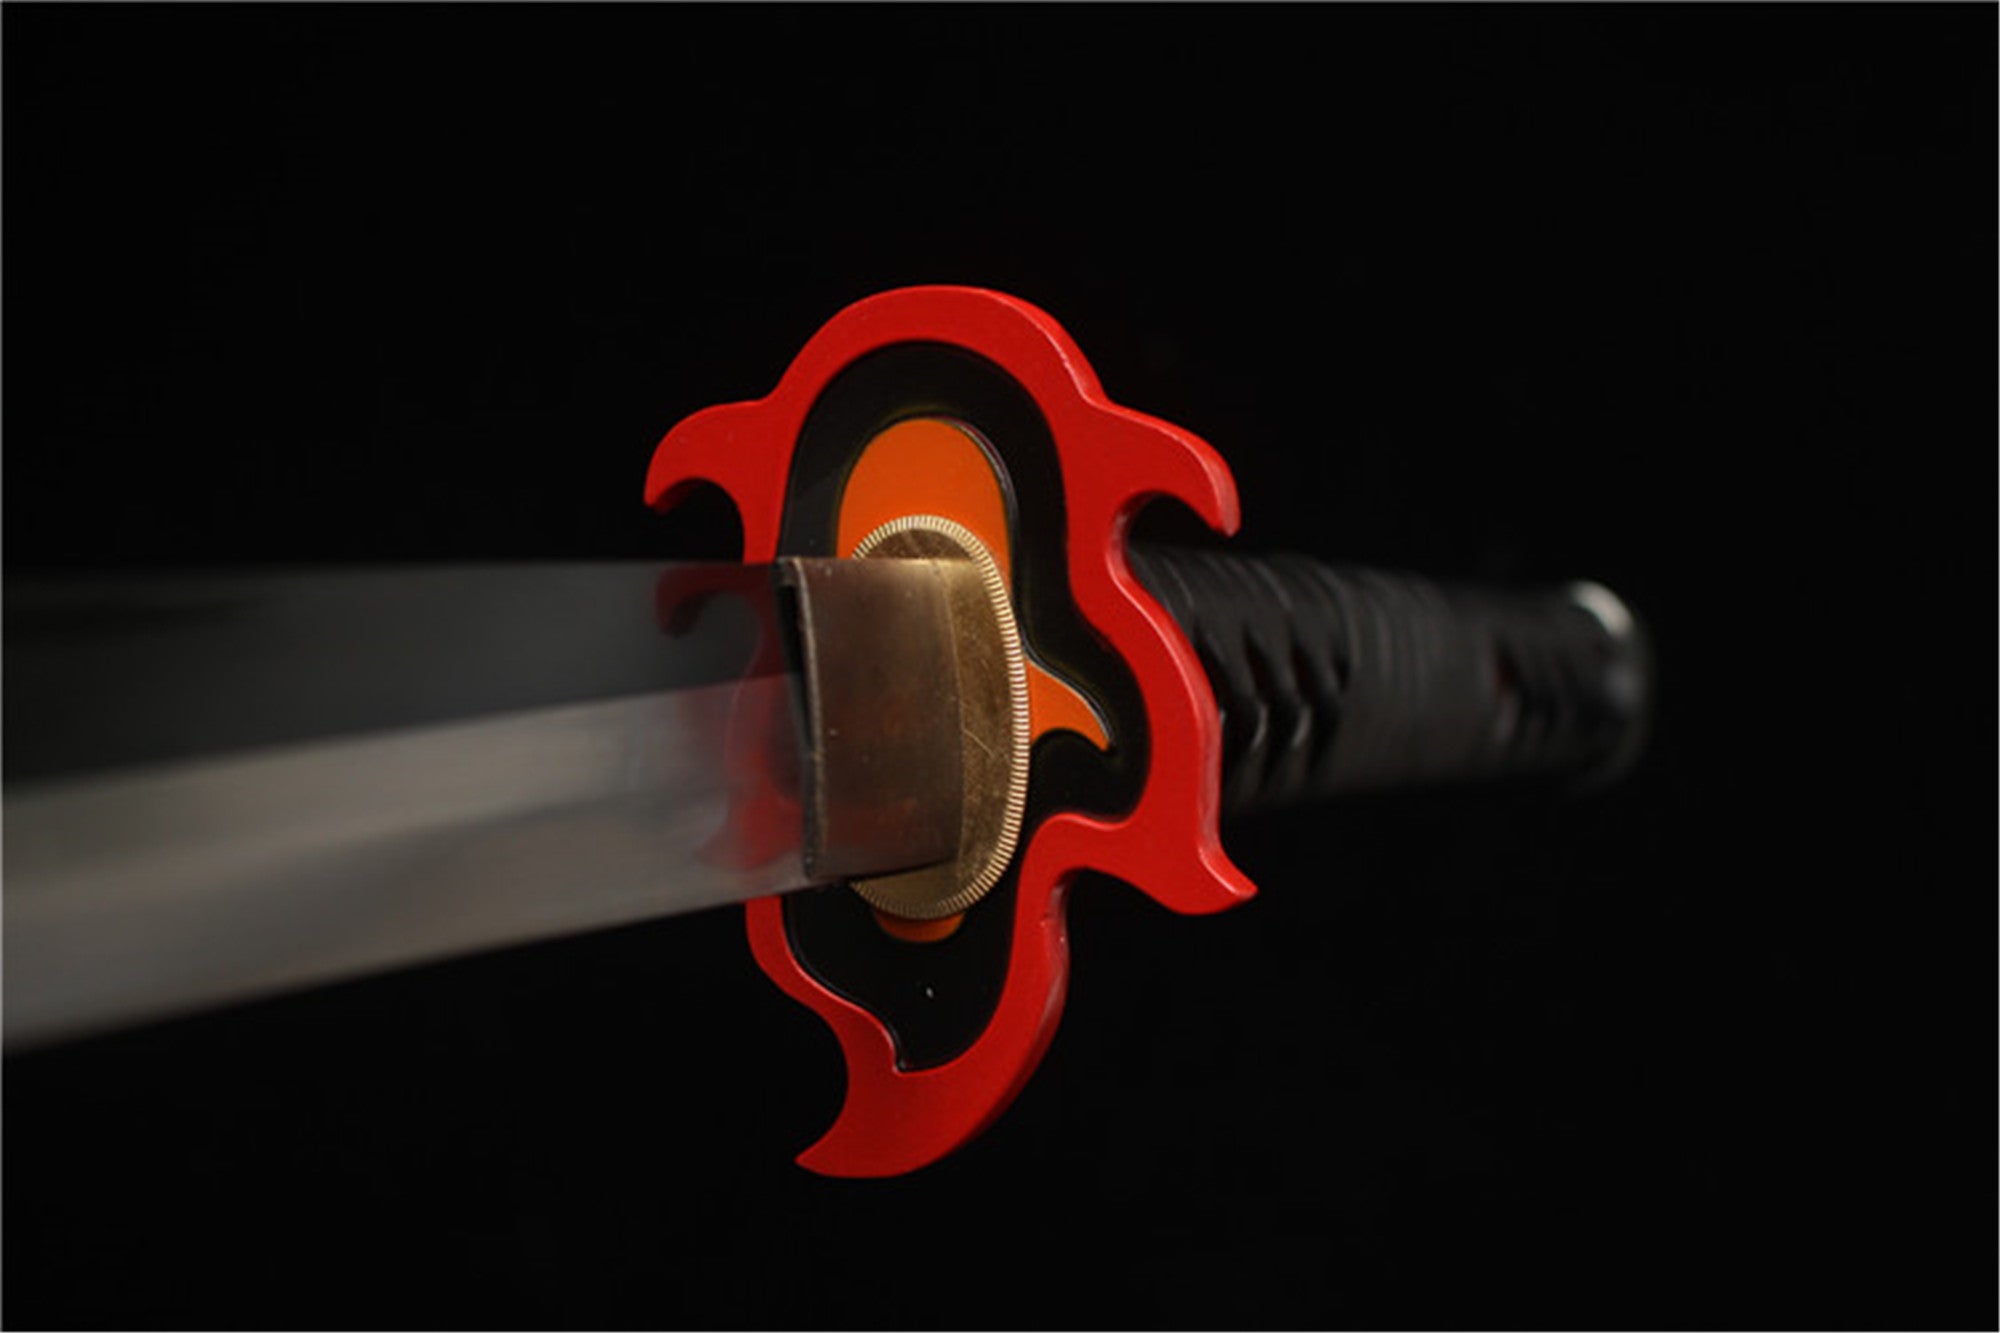 Demon Slayer,Vulcan Tanjirou,Anime Katana Sword,Handmade Samurai Sword,High-carbon steel